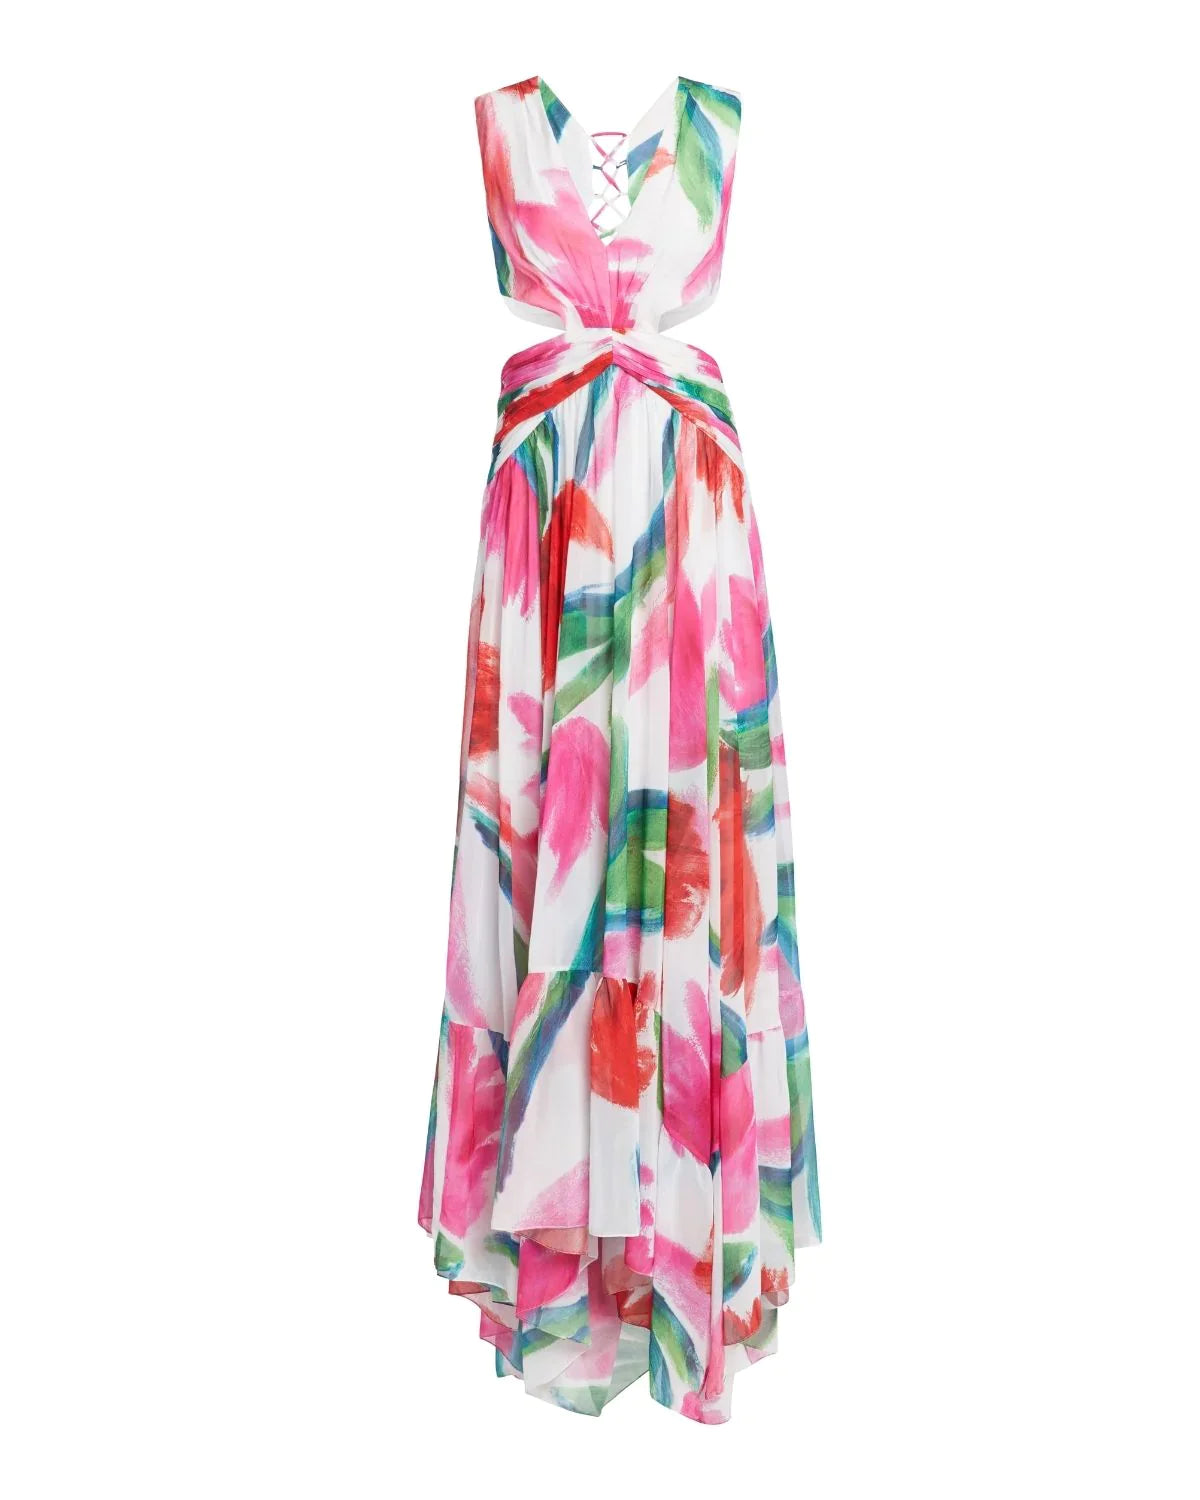 PatBo Allegro Cut Out Maxi Dress - Premium Long dress from Marina St Barth - Just $795.00! Shop now at Marina St Barth